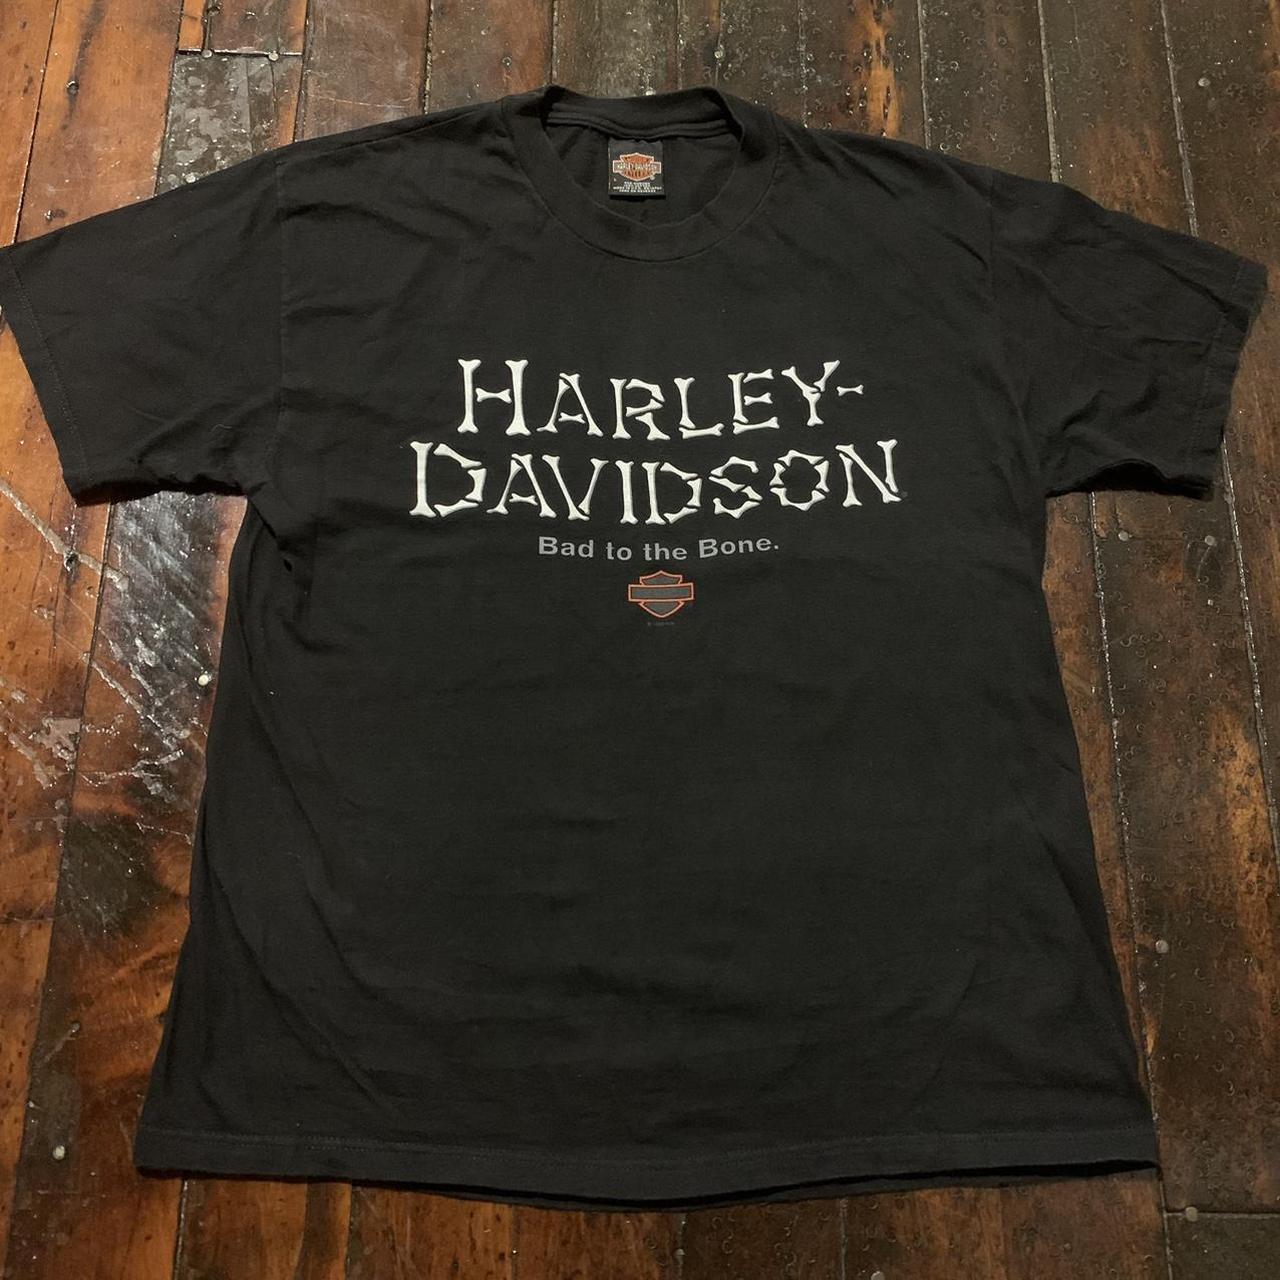 Harley Davidson Harley Davidson Bad to the Bone Rn#15763